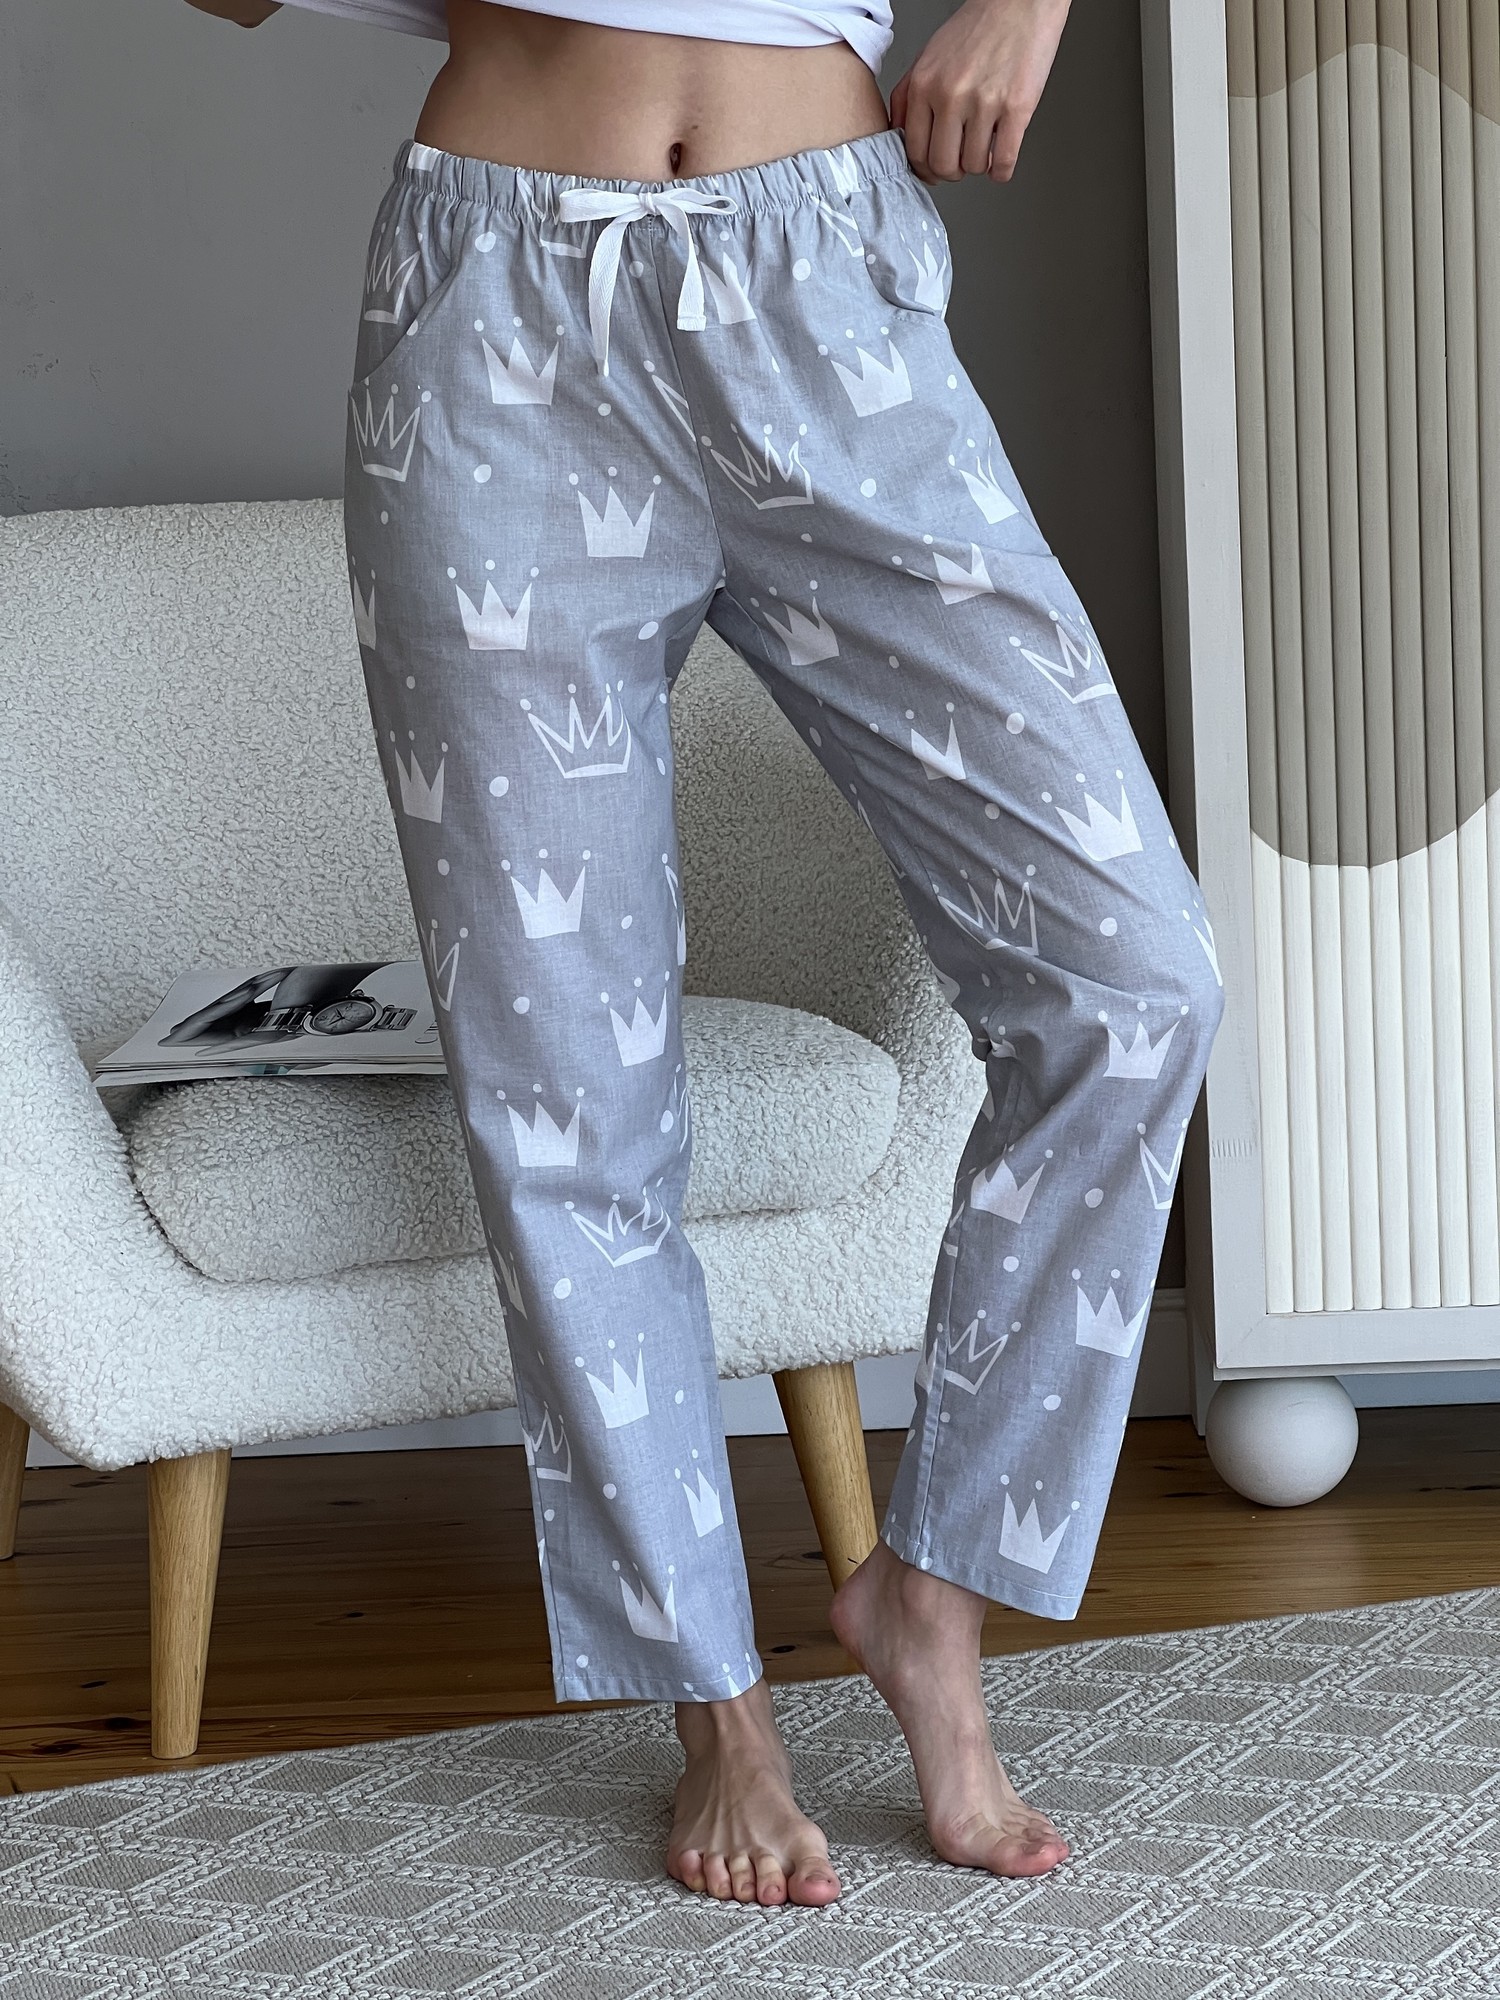 Women's COZY calico pajama pants gray with white Crowns C211P